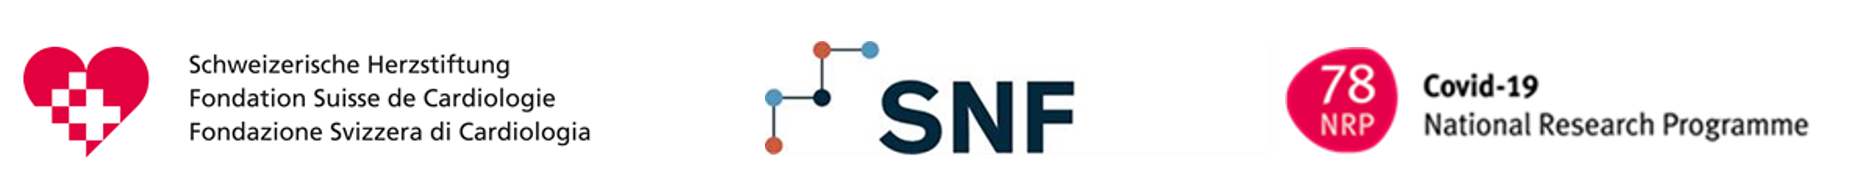 SHF SNF NRP78 logos